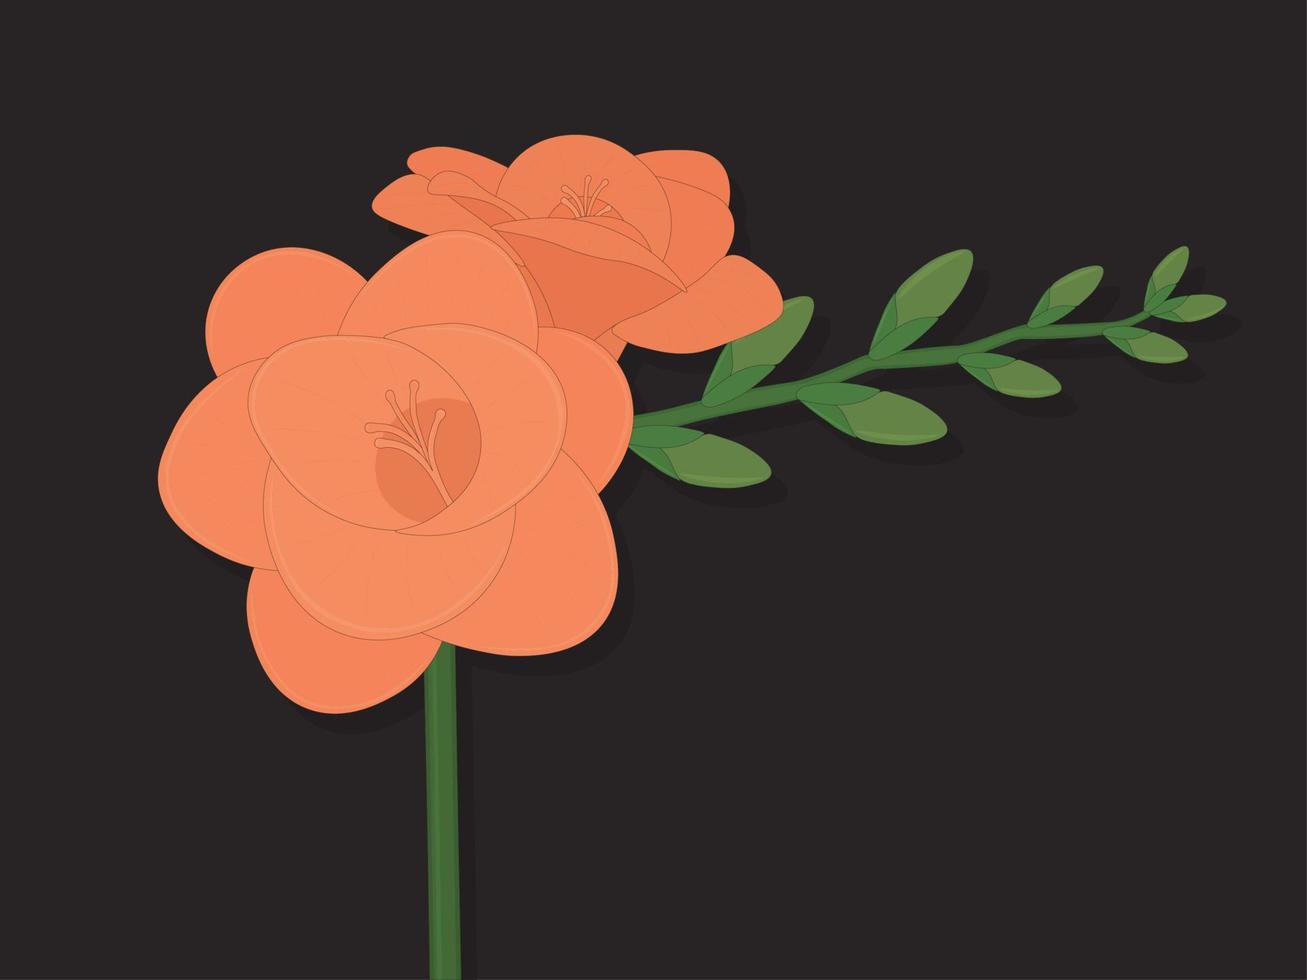 Light orange freesia flower with buds on black background vector illustration